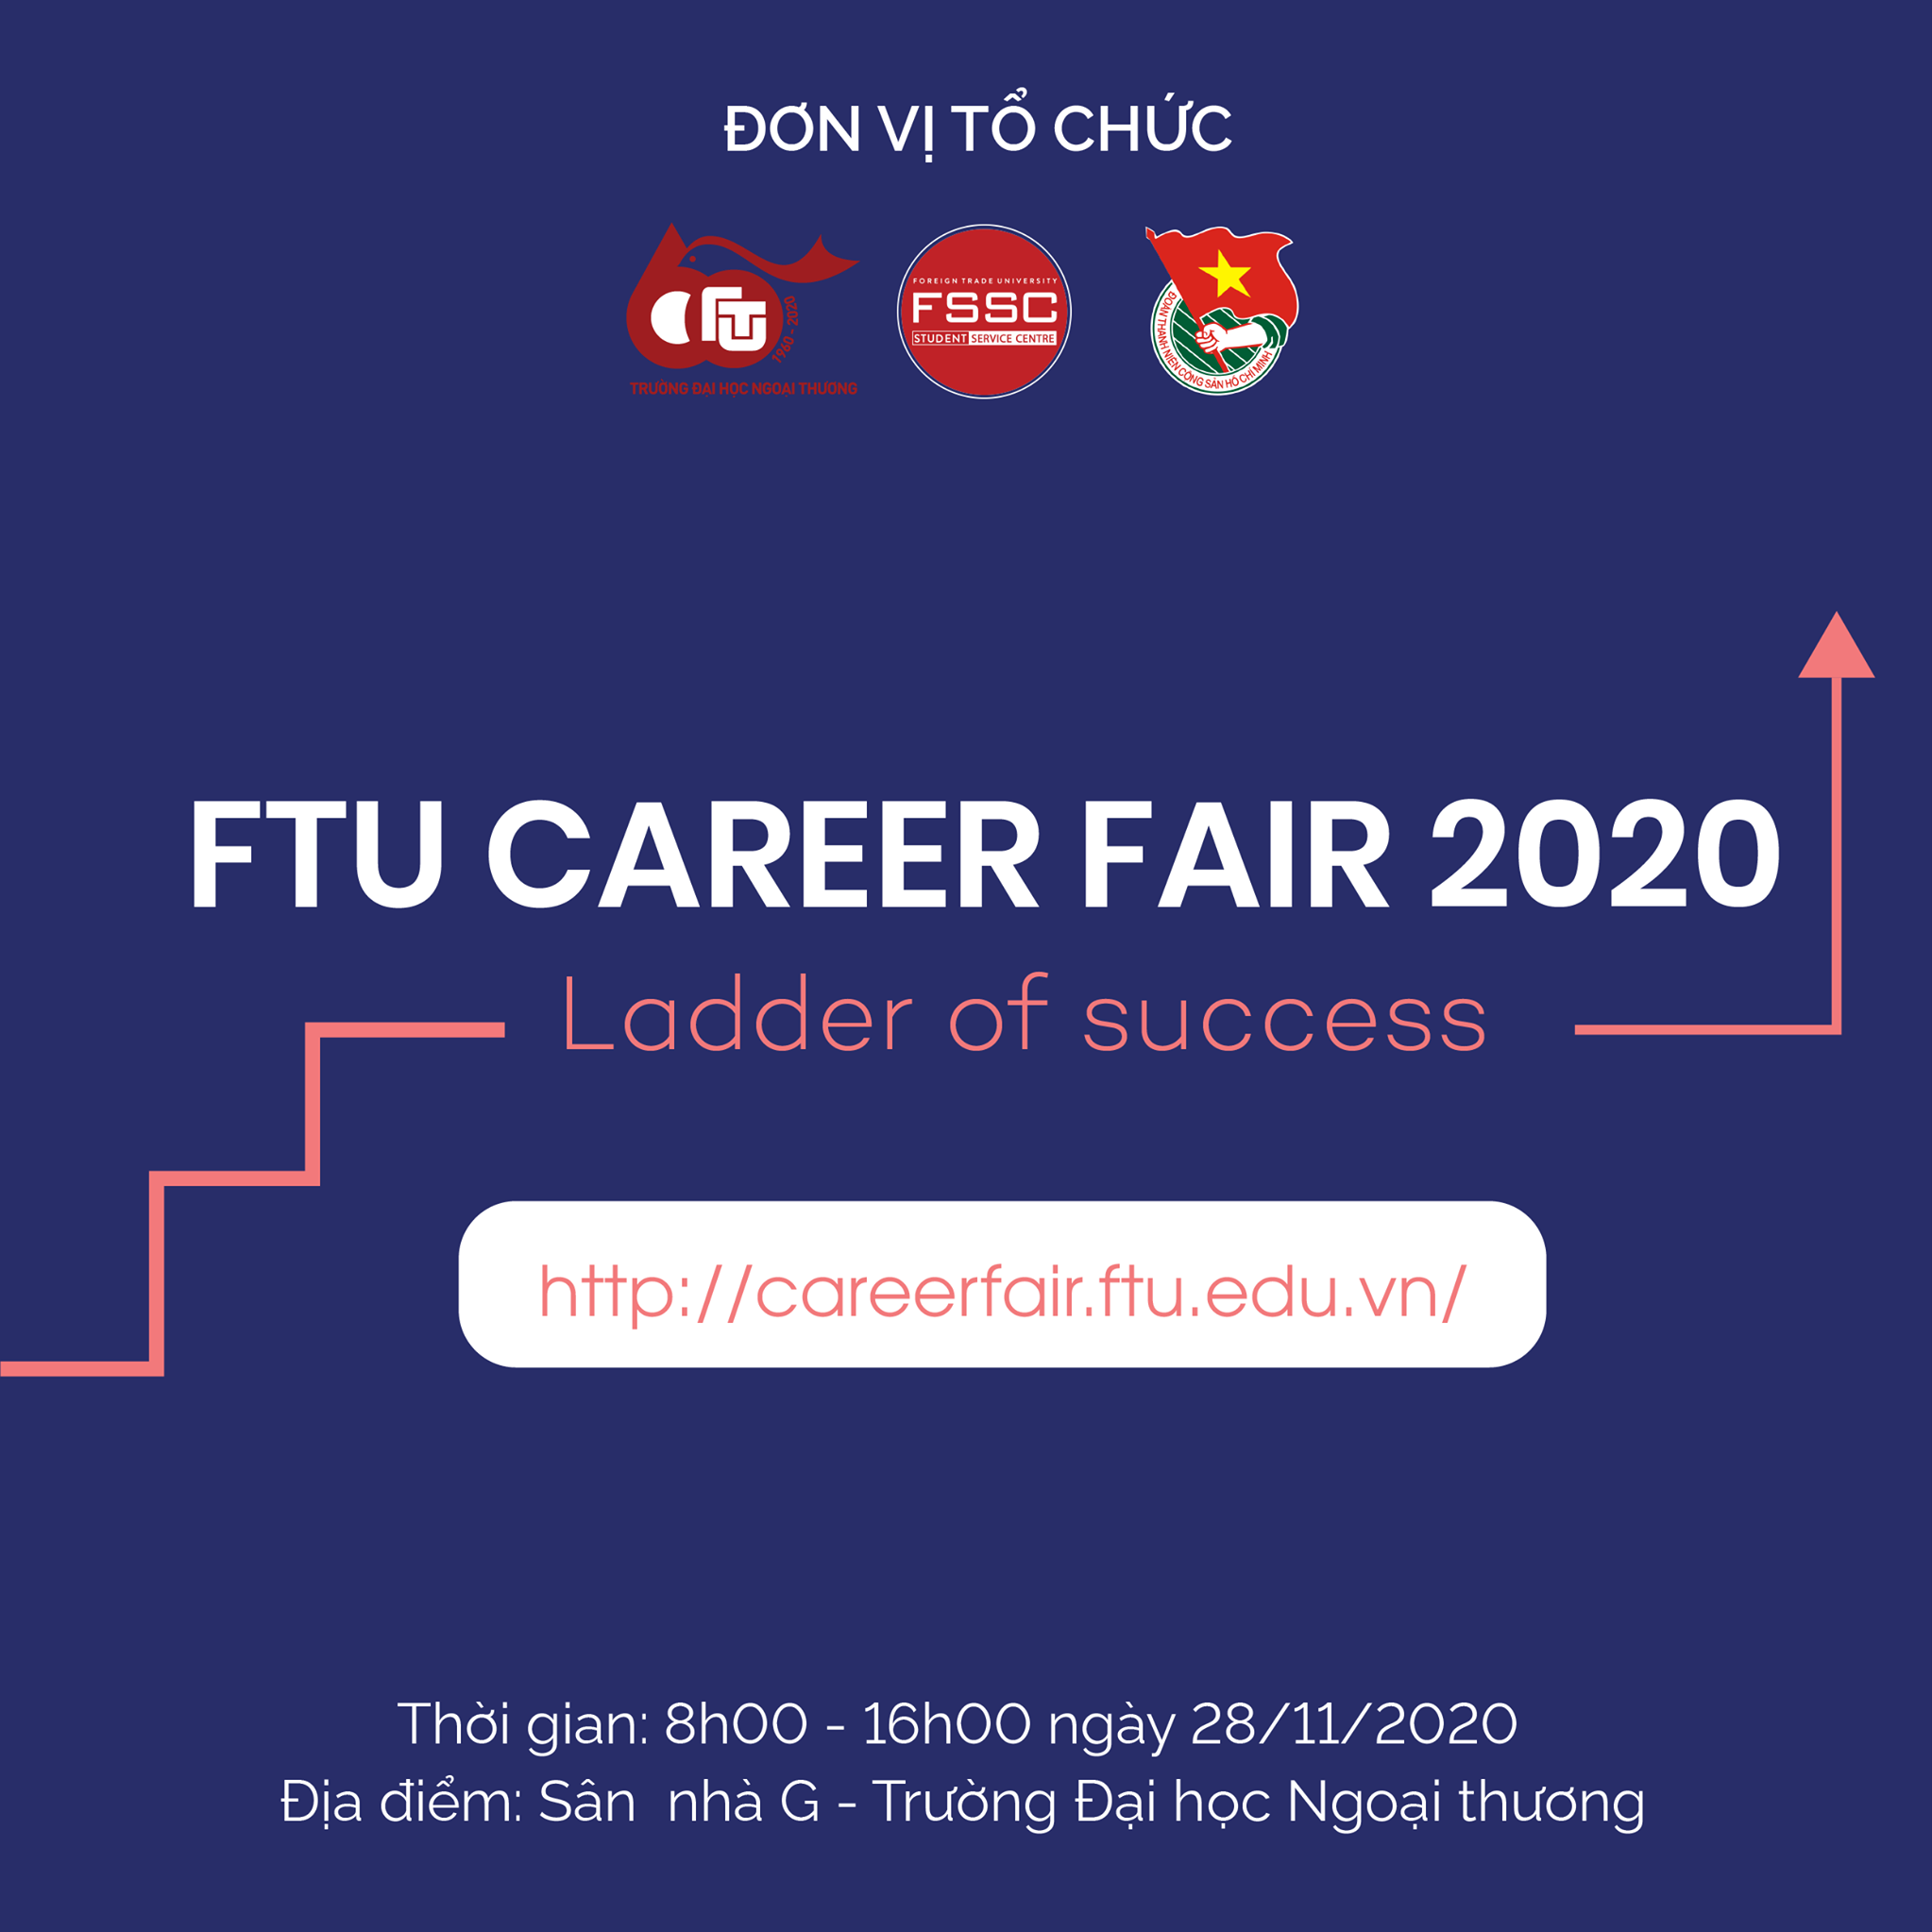  FTU Career Fair 2020 – Ladder of Success